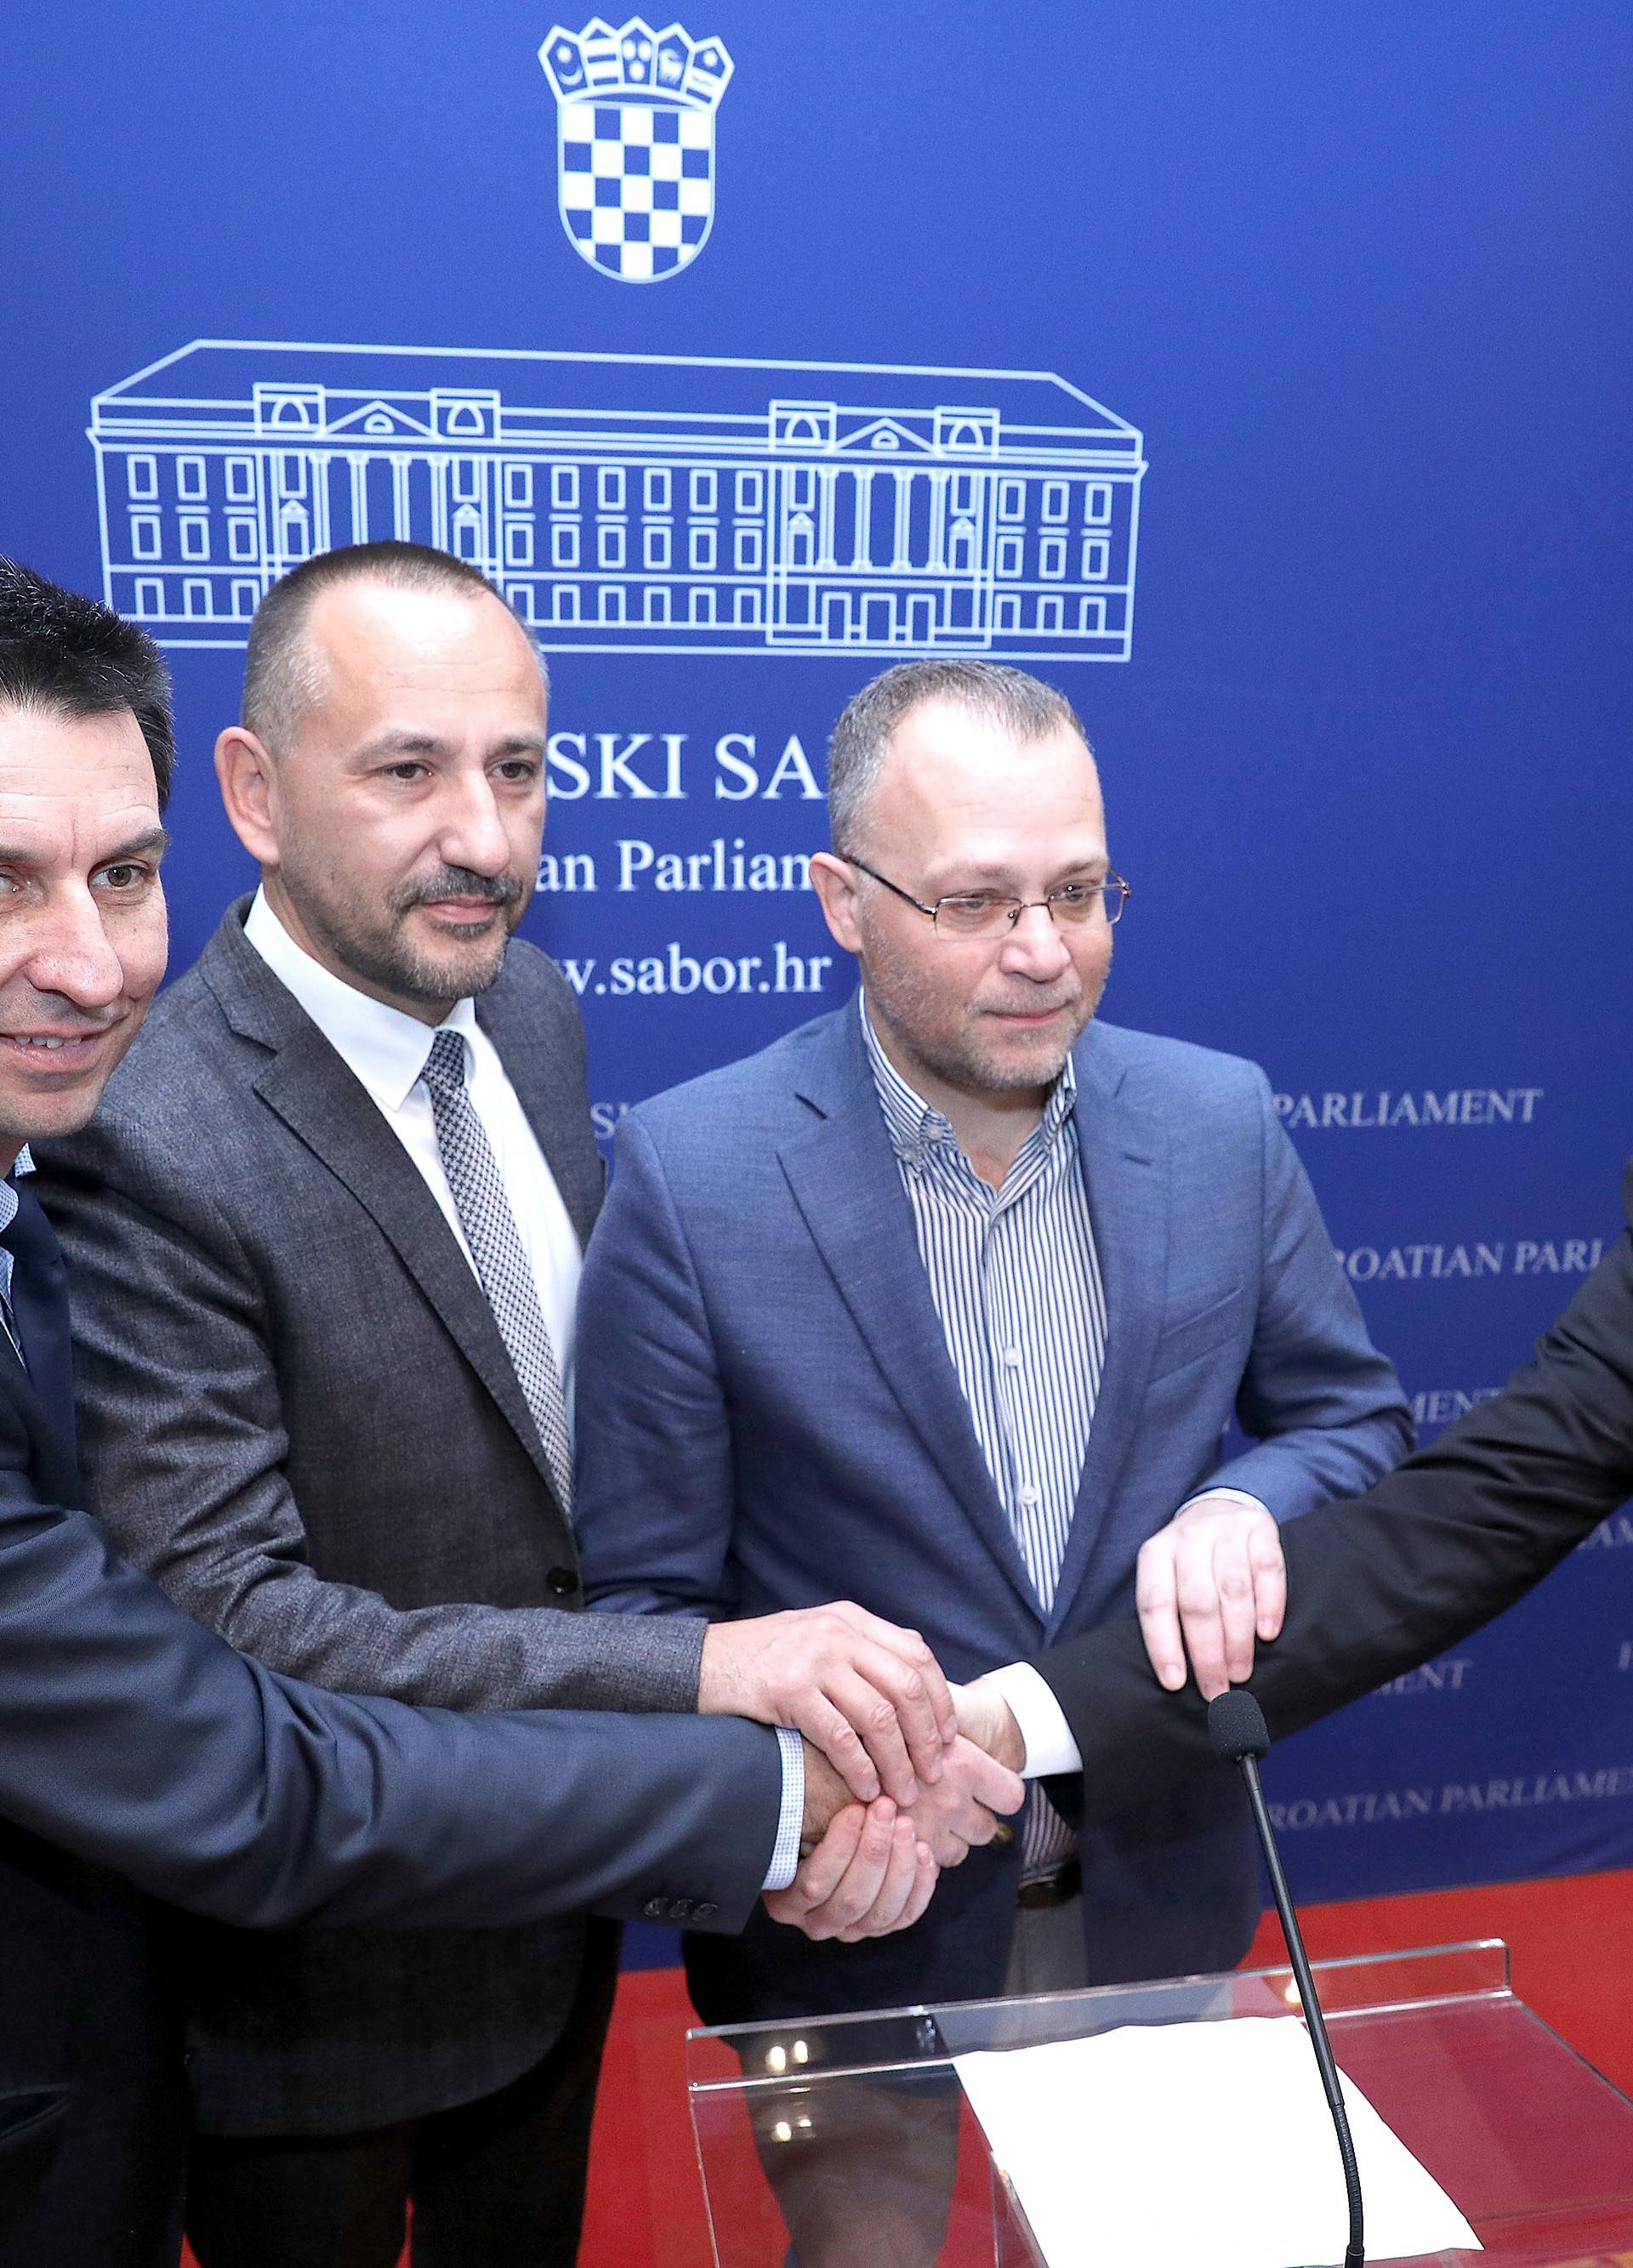 Zagreb: Potpisan ugovor o suradnji suverenističkih stranaka na parlamentarinim izborima 2020. godine